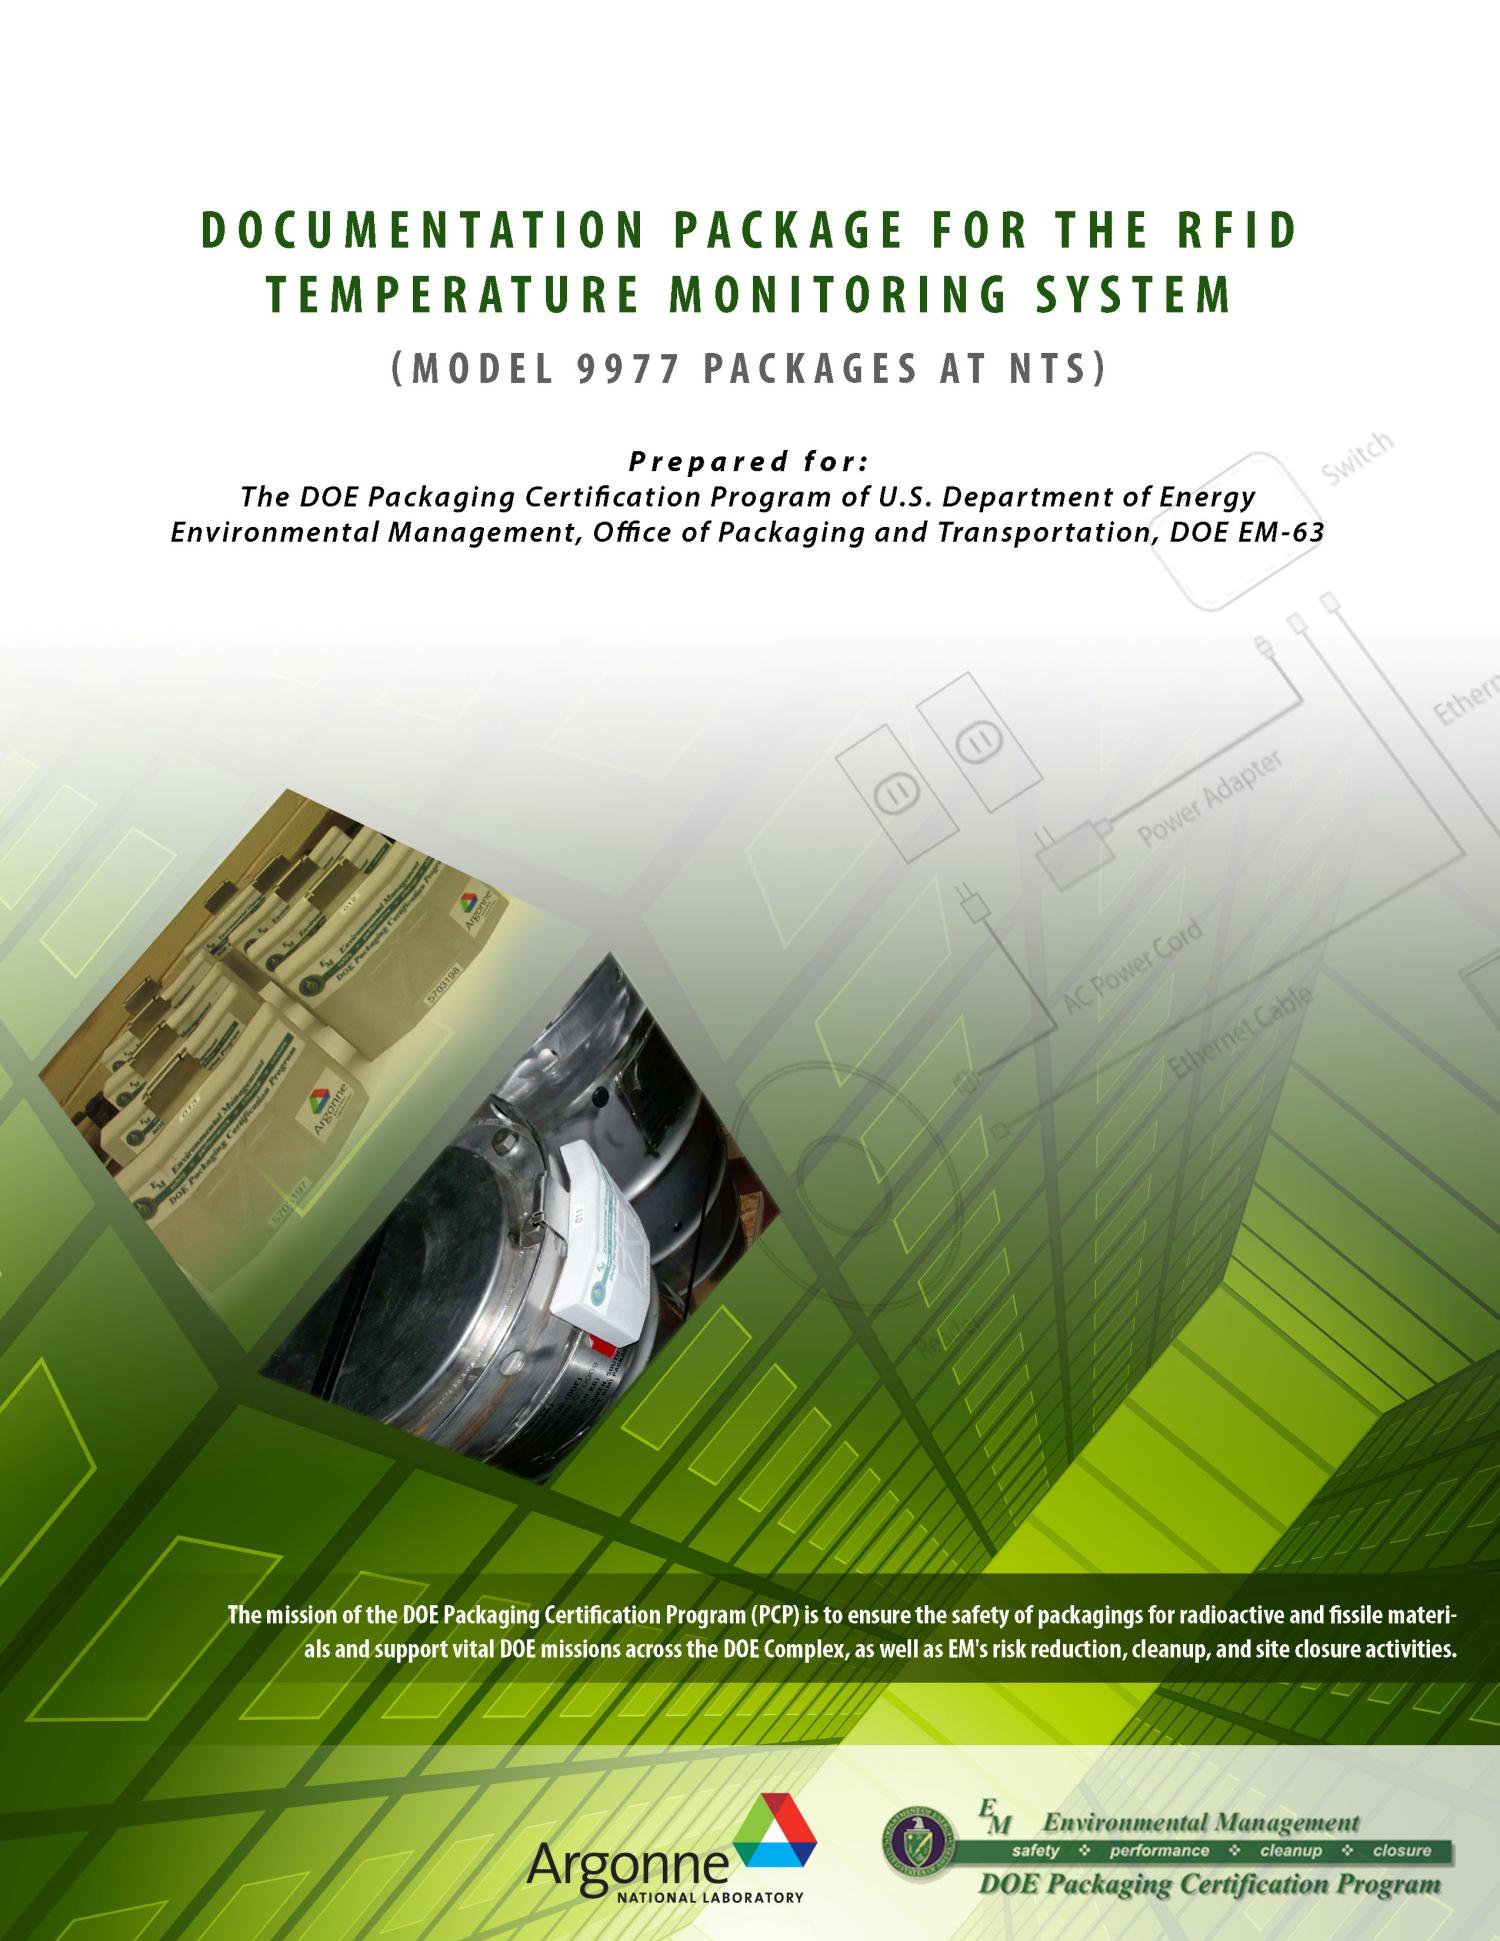 Digital Temperature Monitoring Management System